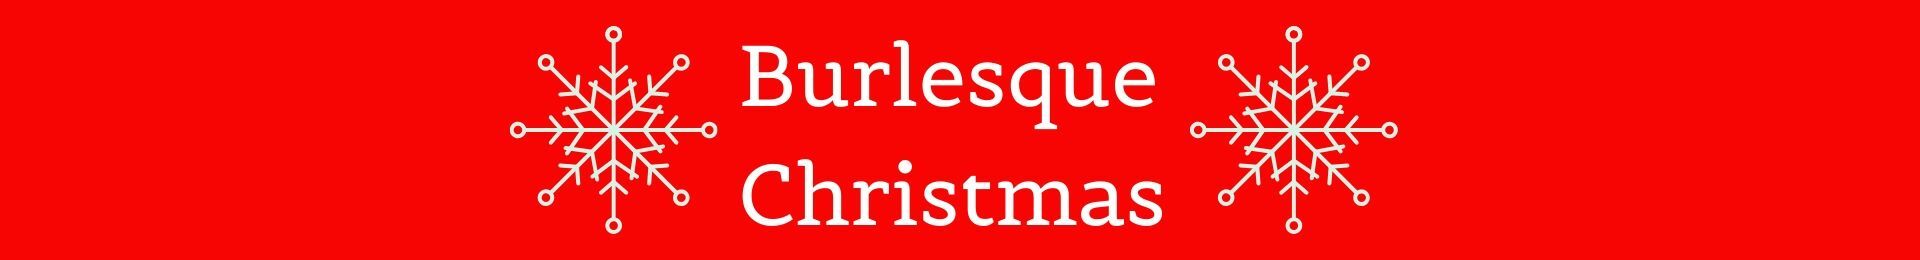 Burlesque Christmas banner image